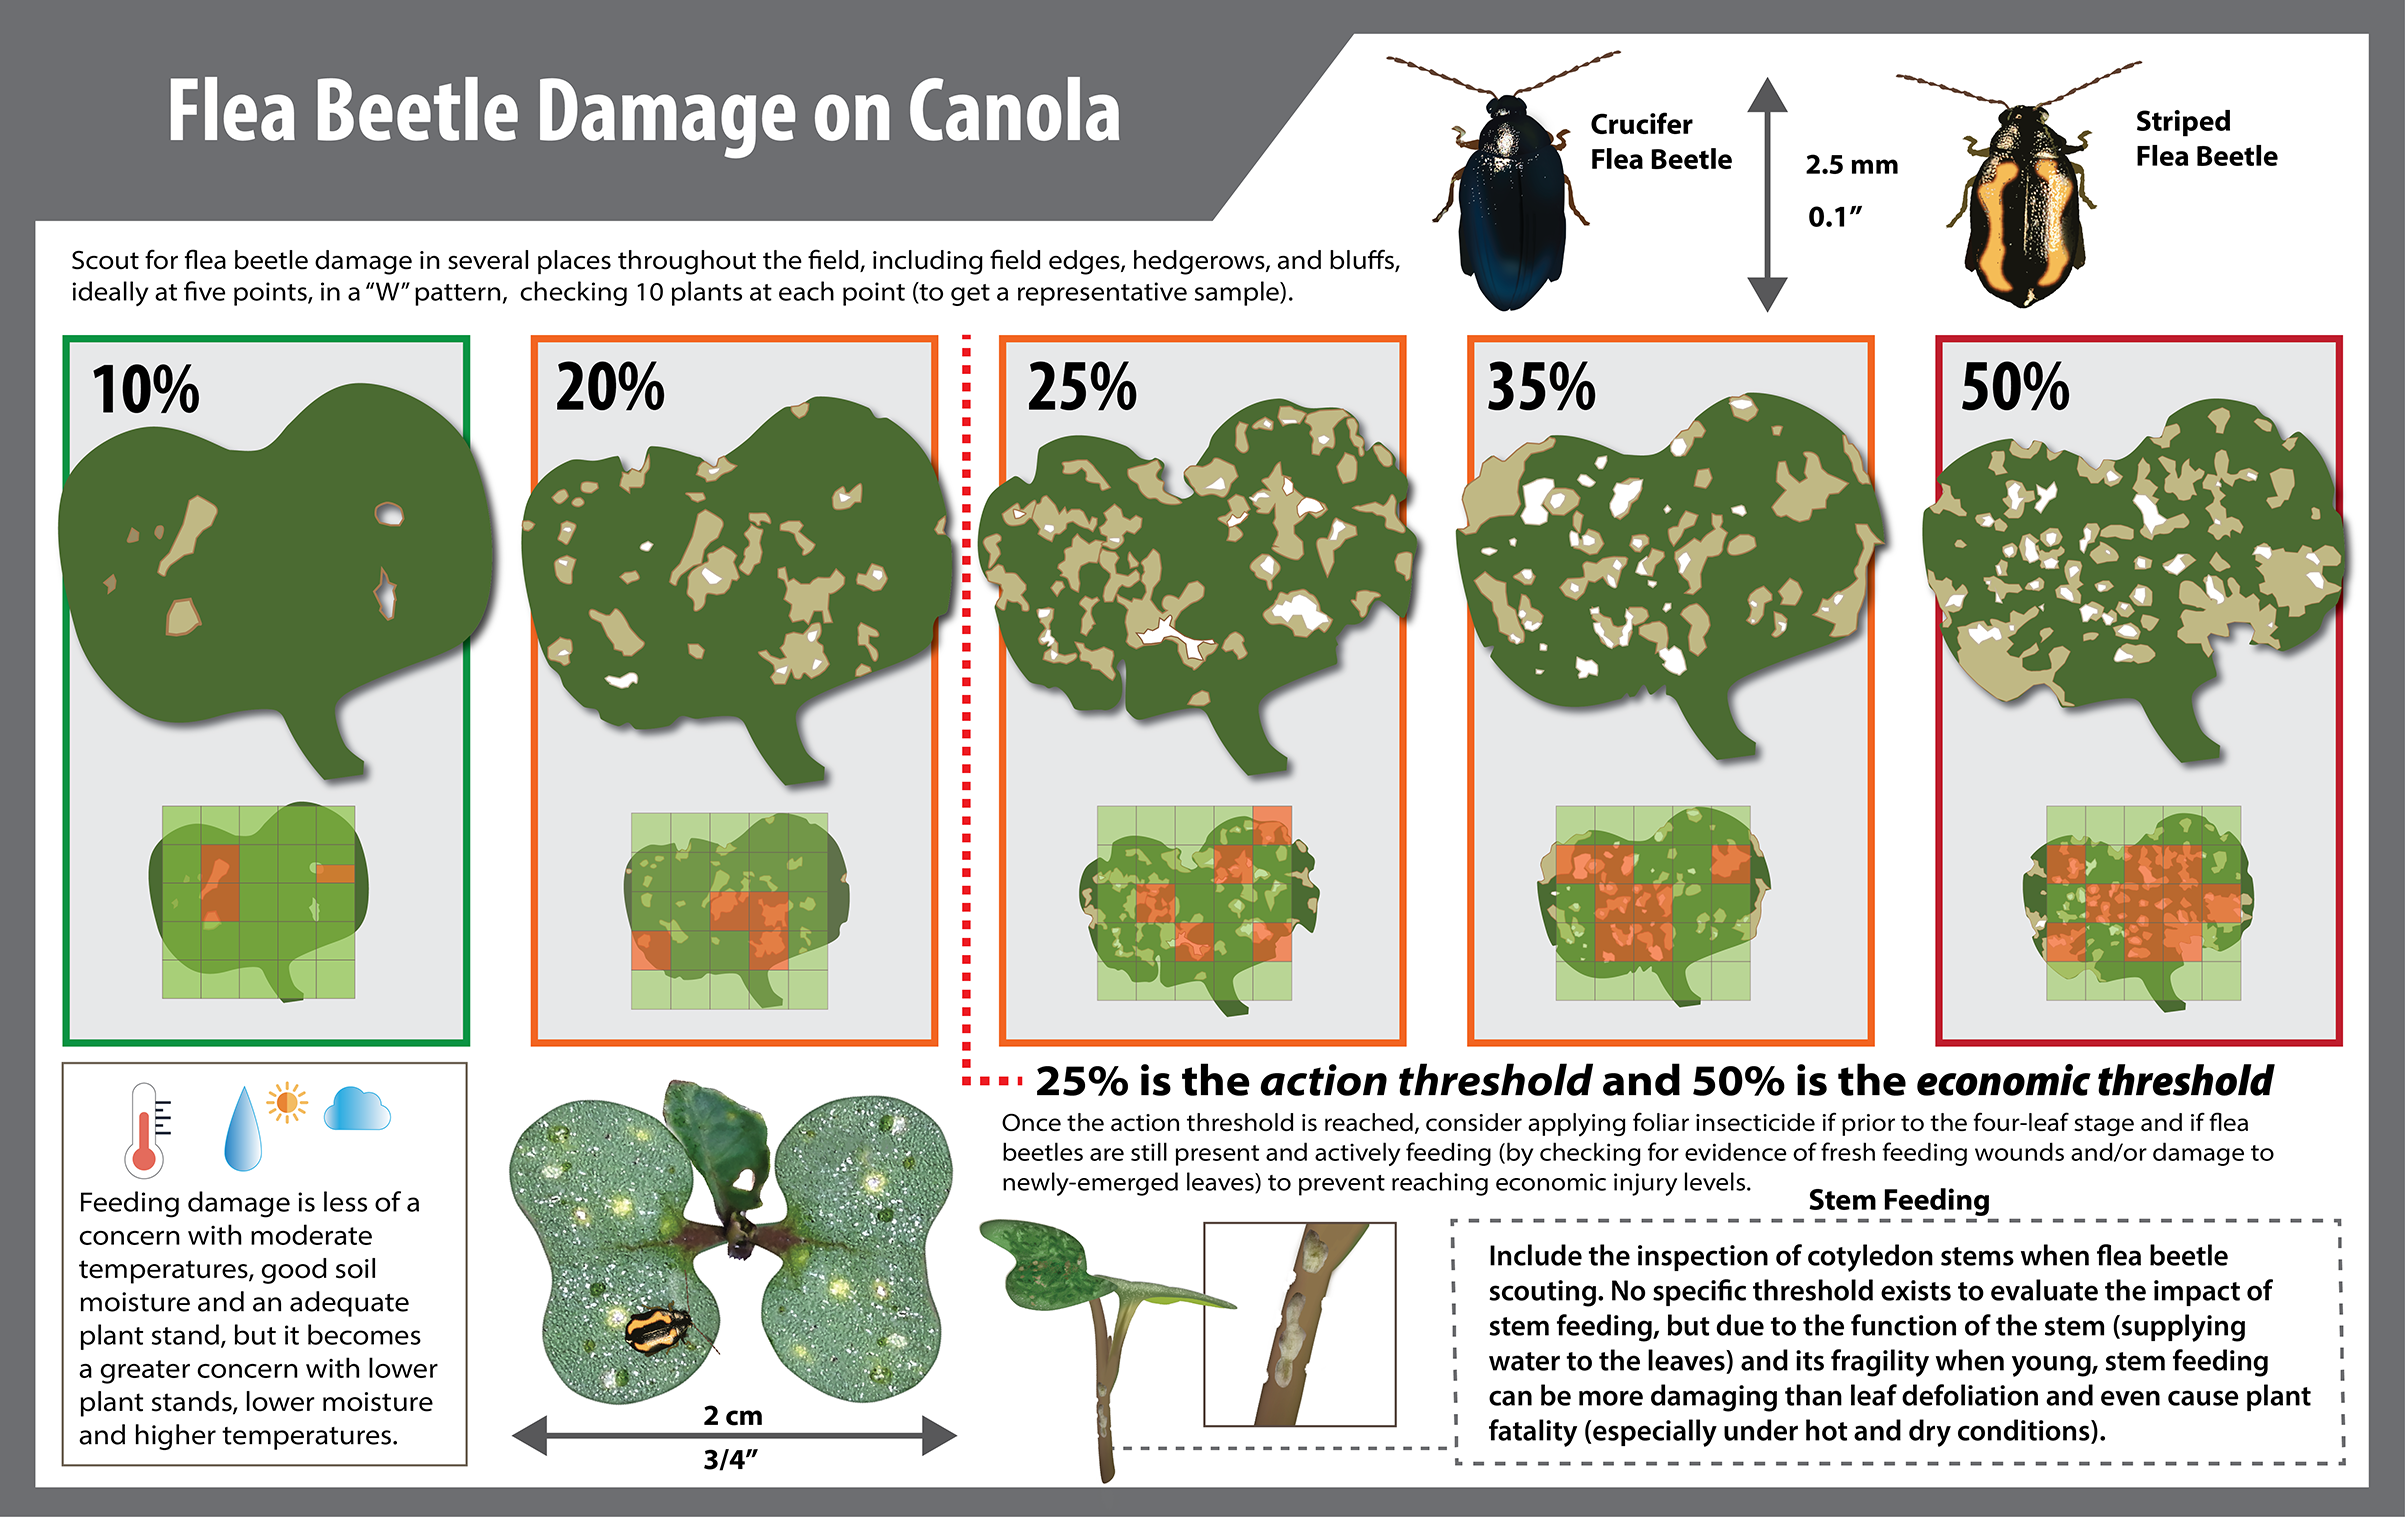 'Flea Beetle Damage on Canola' infographic